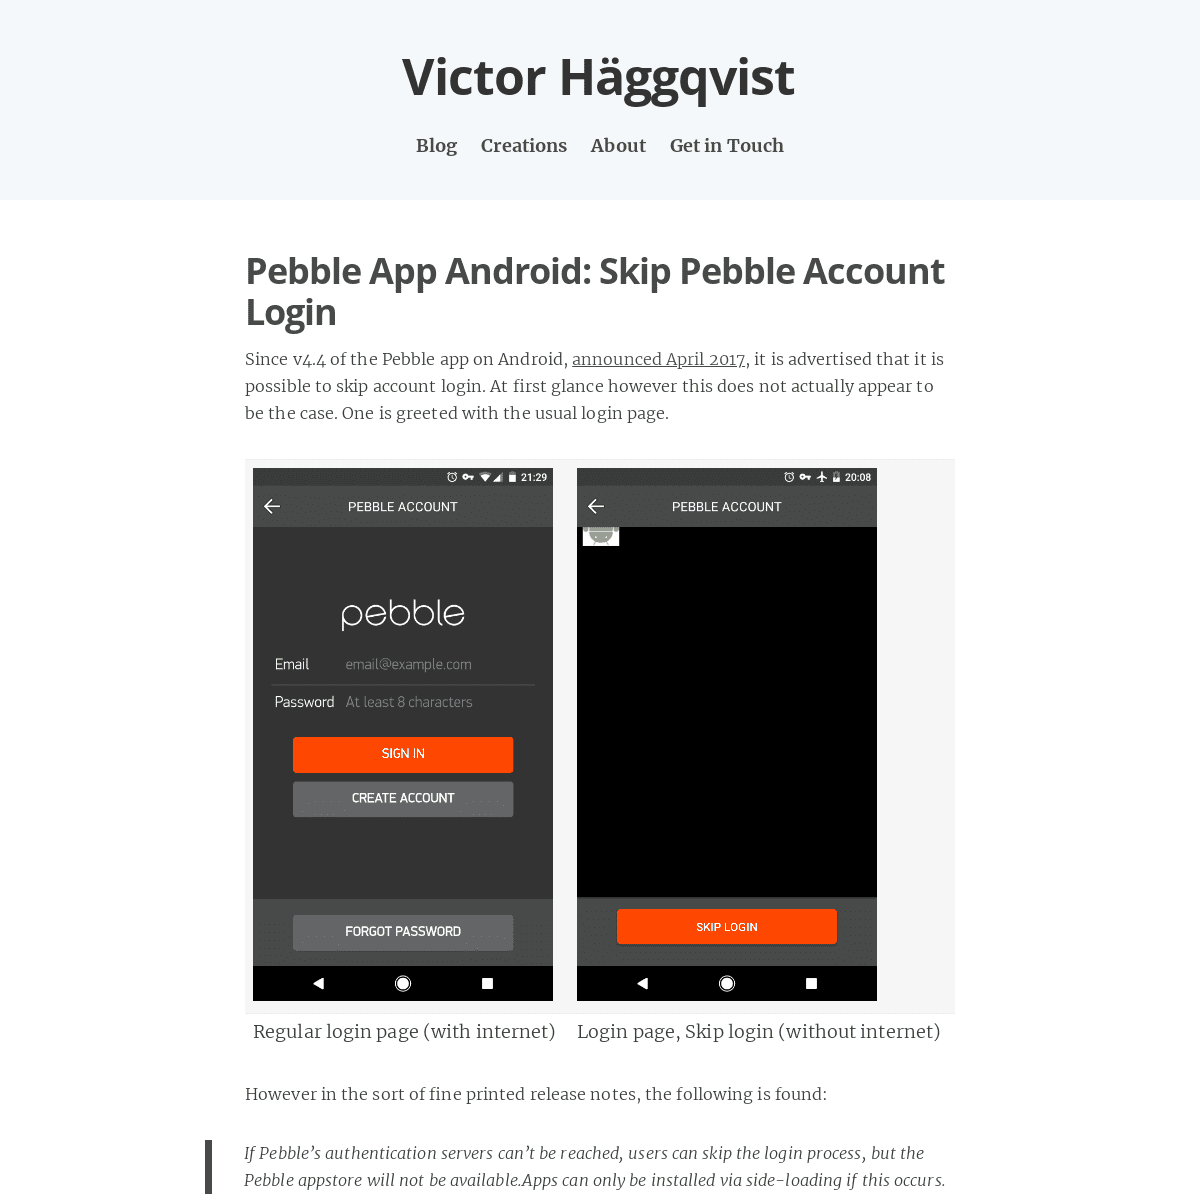 A complete backup of victorhaggqvist.com